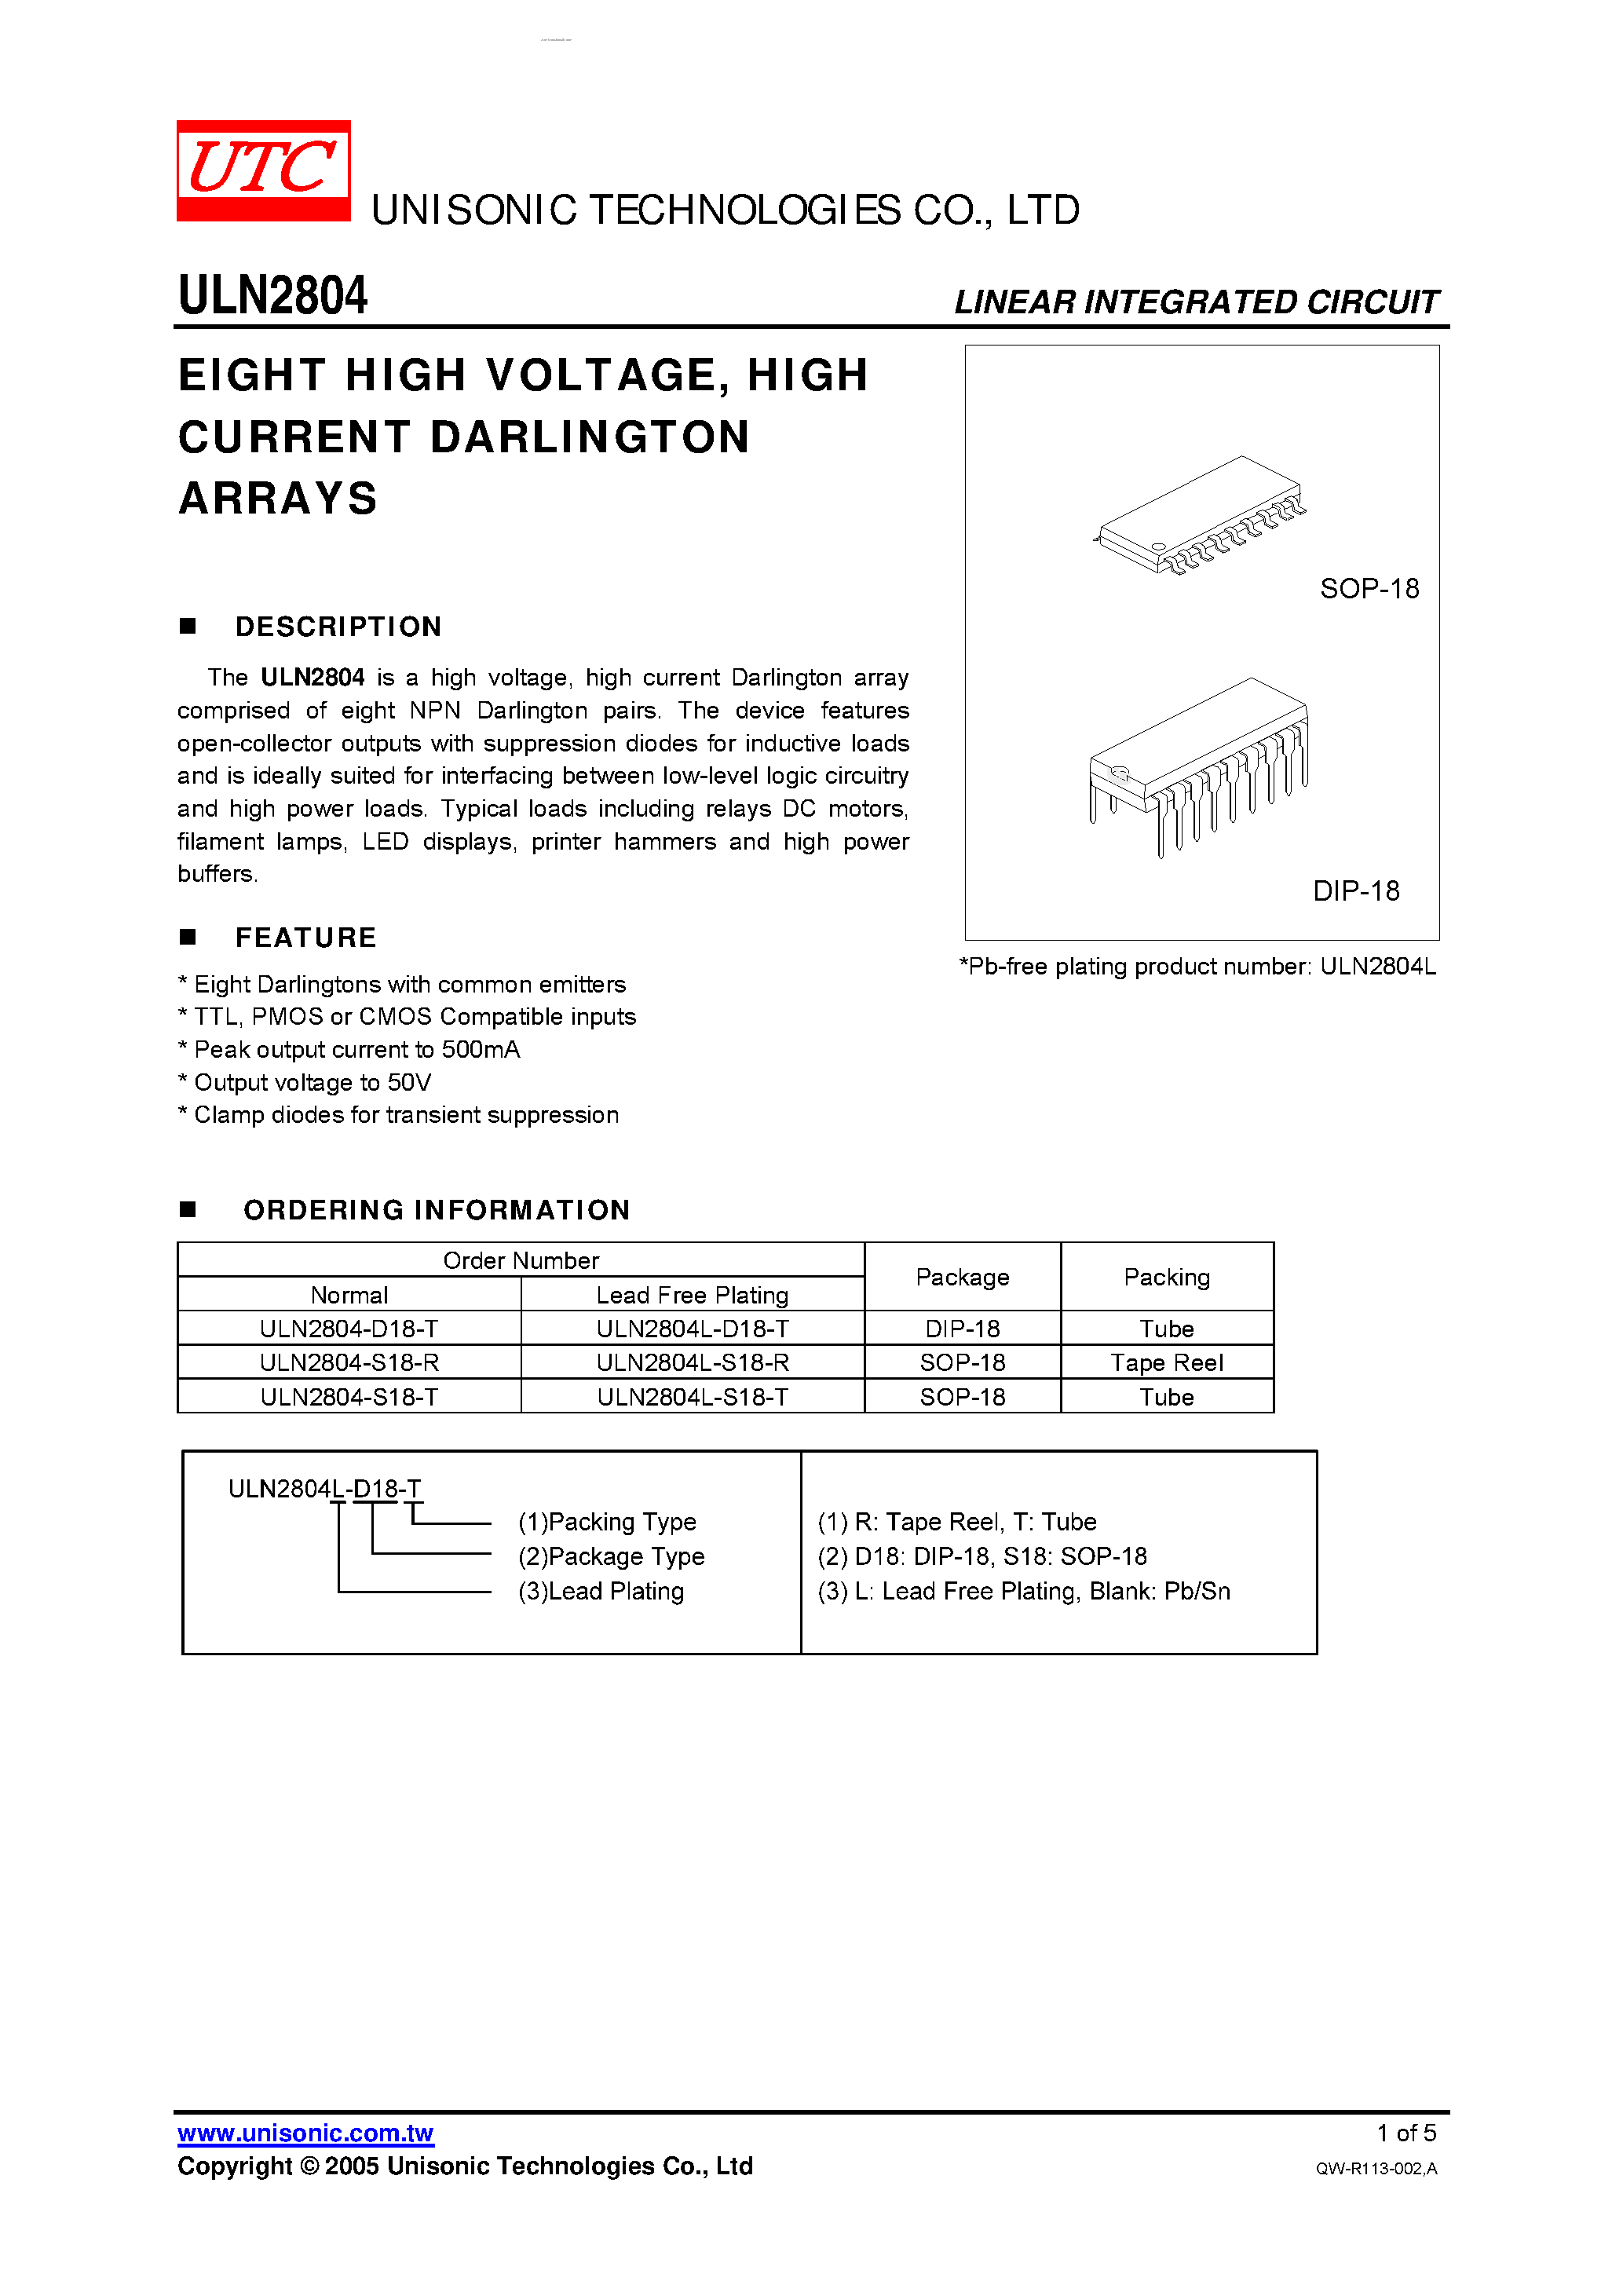 Datasheet ULN2804 - Eight High Voltage High Current Darlington Arrays page 1